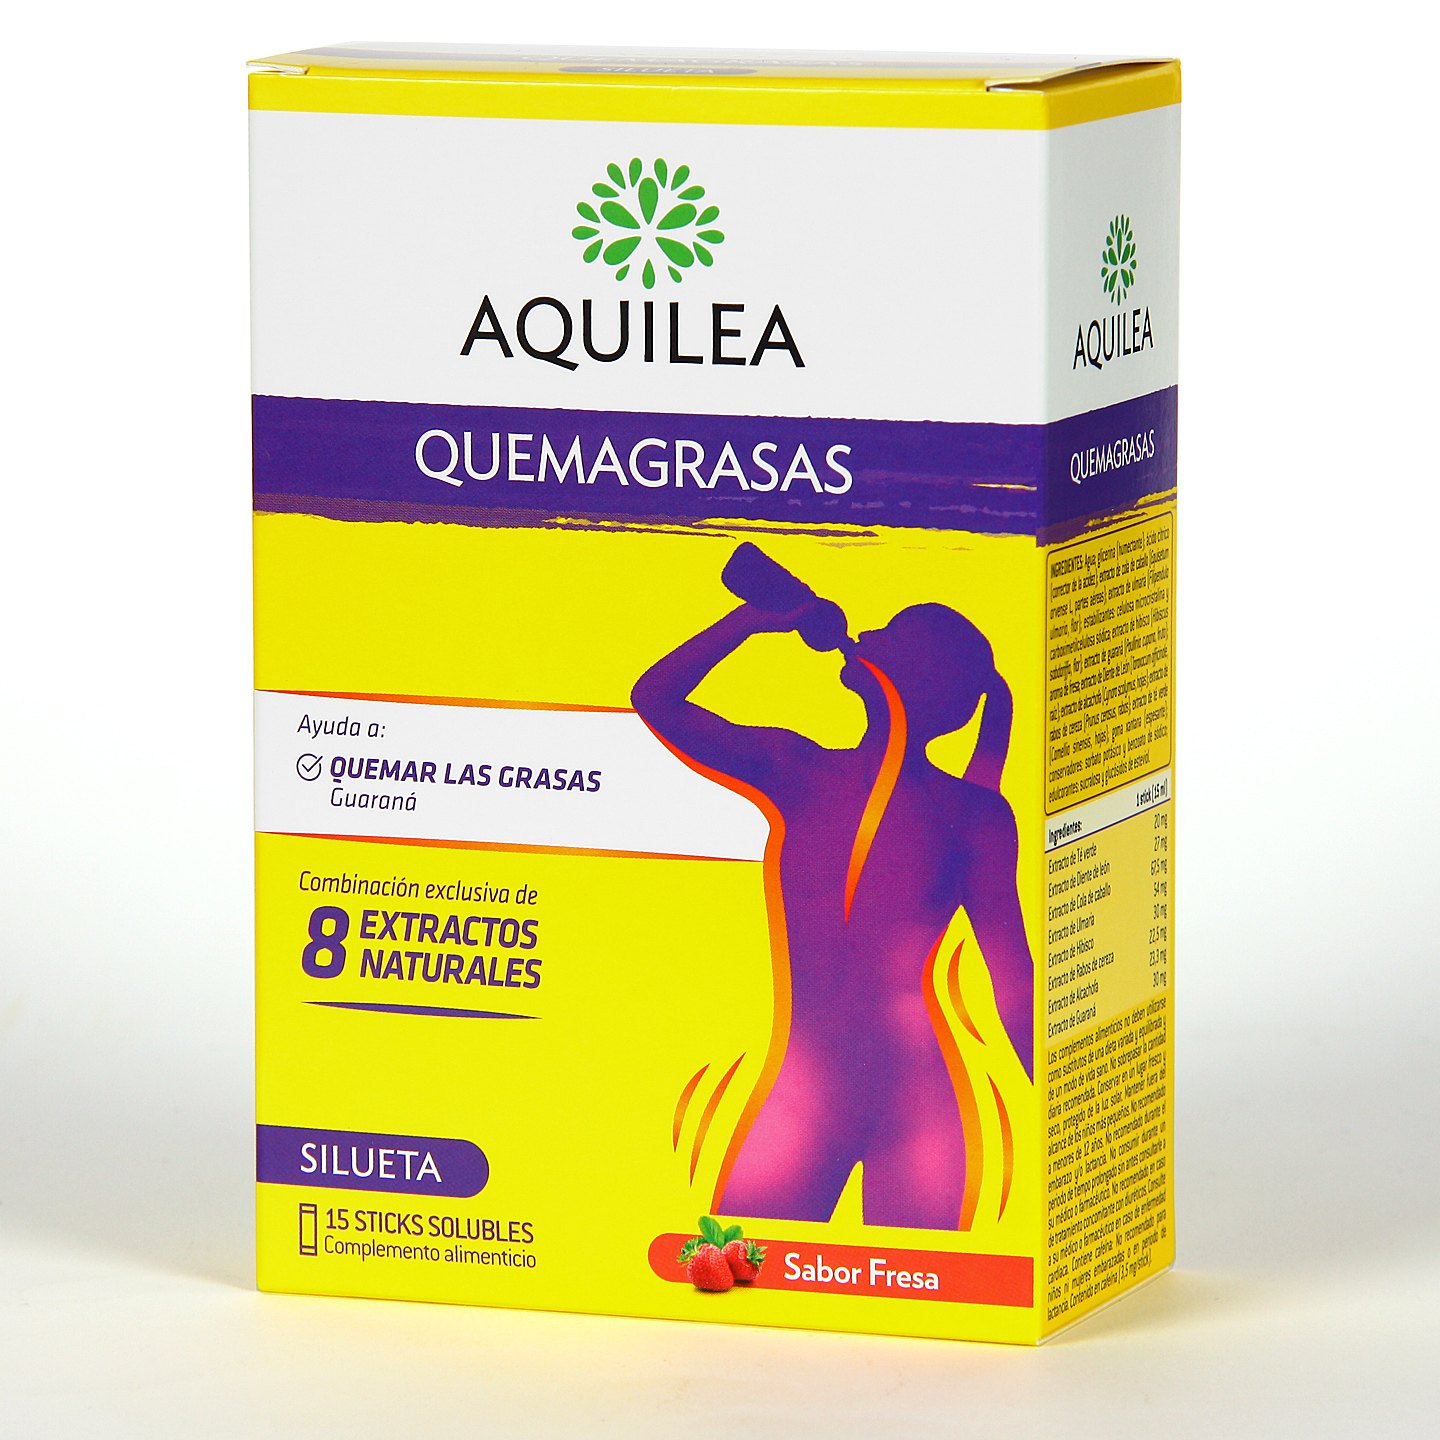 https://farmaciajimenez.com/storage/products/aquilea-quemagrasas-15-stick-solubles/aquilea-quemagrasas-sabor-fresa-15-sticks-solubles-1440.jpg